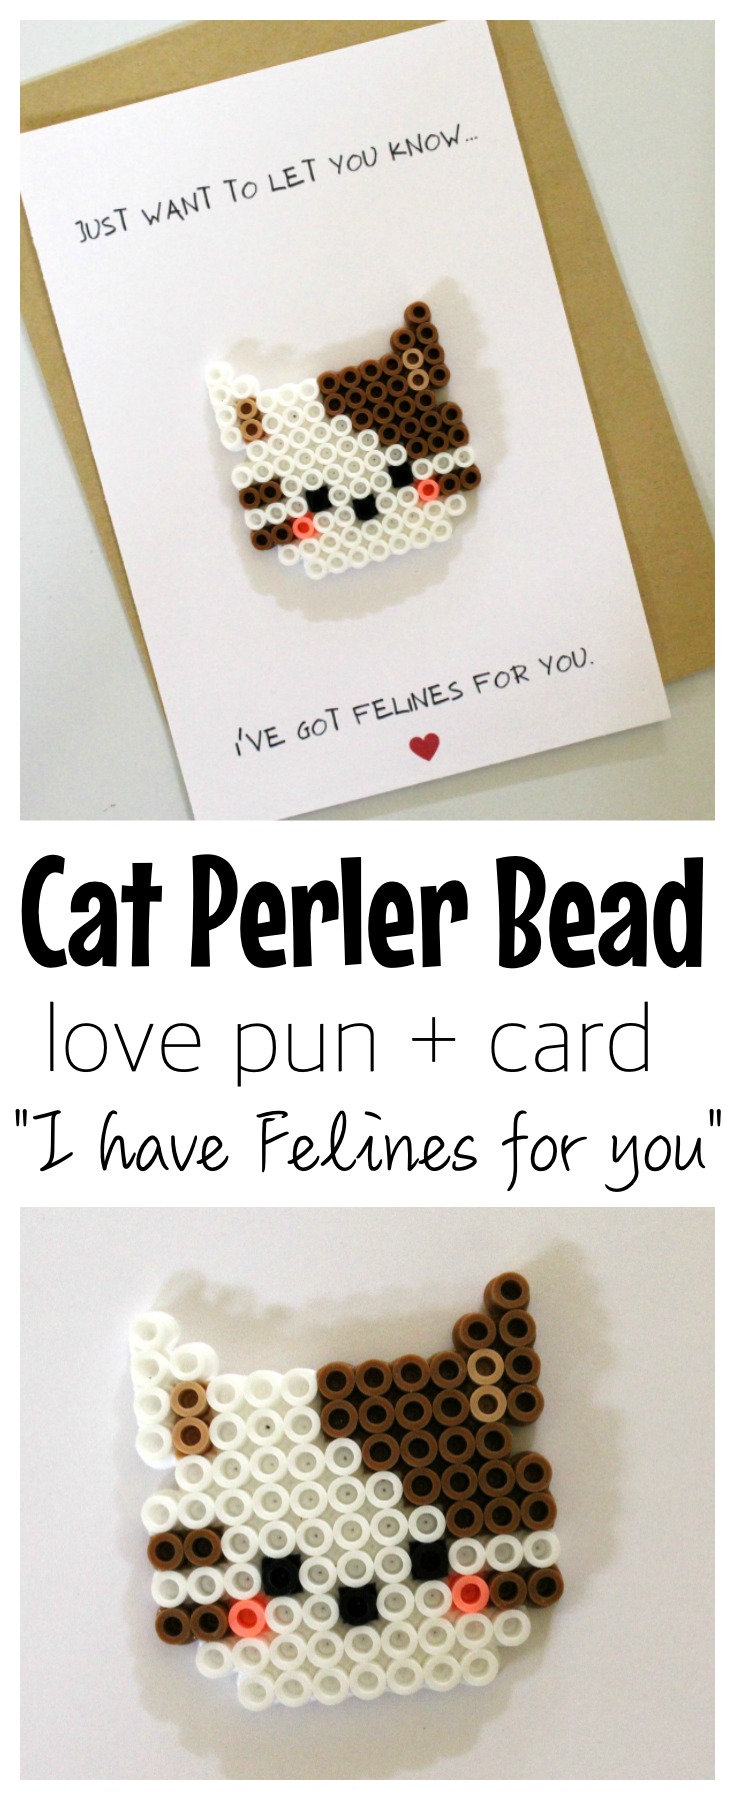 Cat Perler Bead Love Pun Card